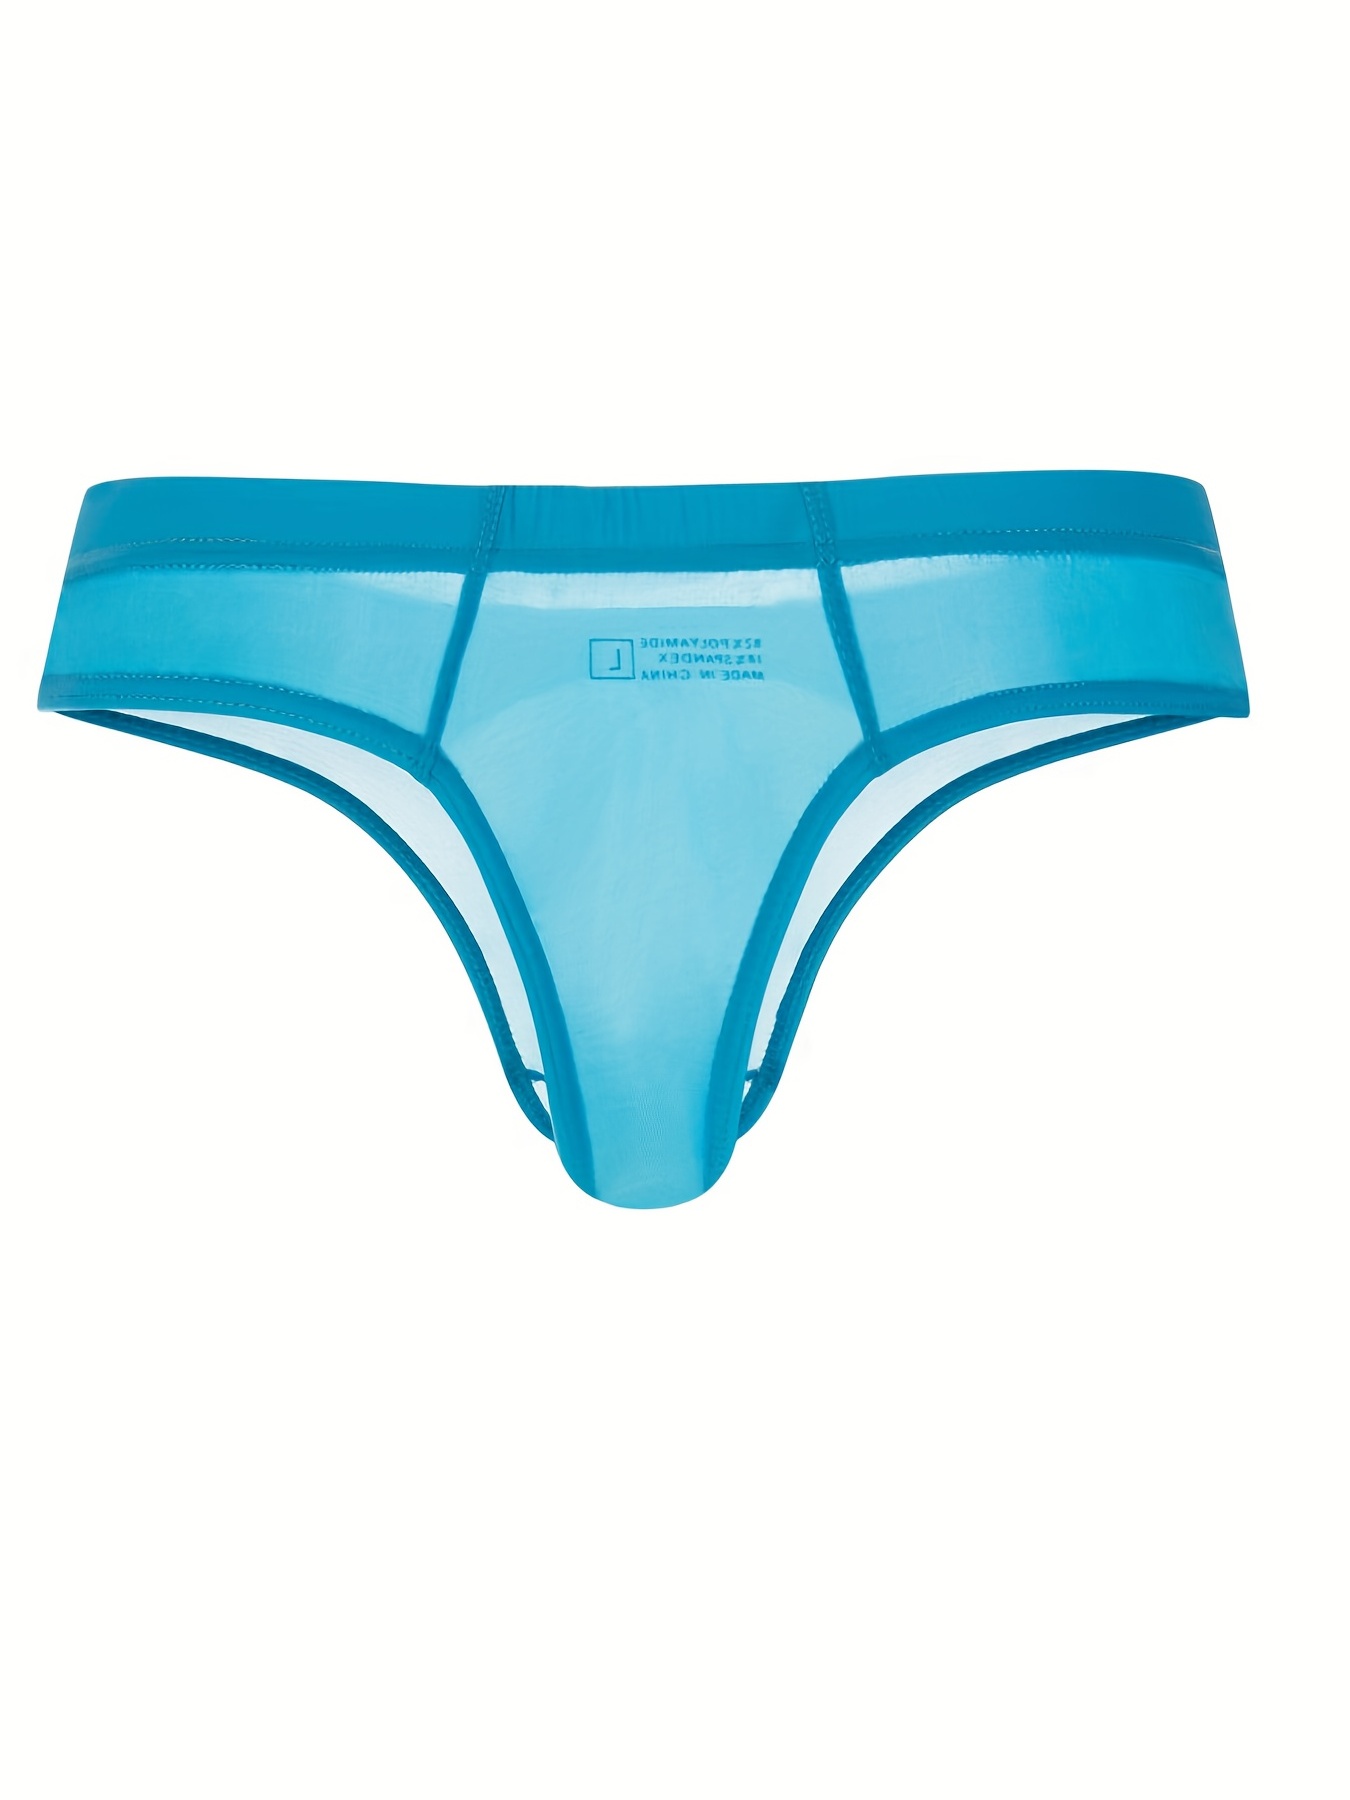 Mens Sexy See-Through Thongs Underwear Low Rise Bikini T-Back G